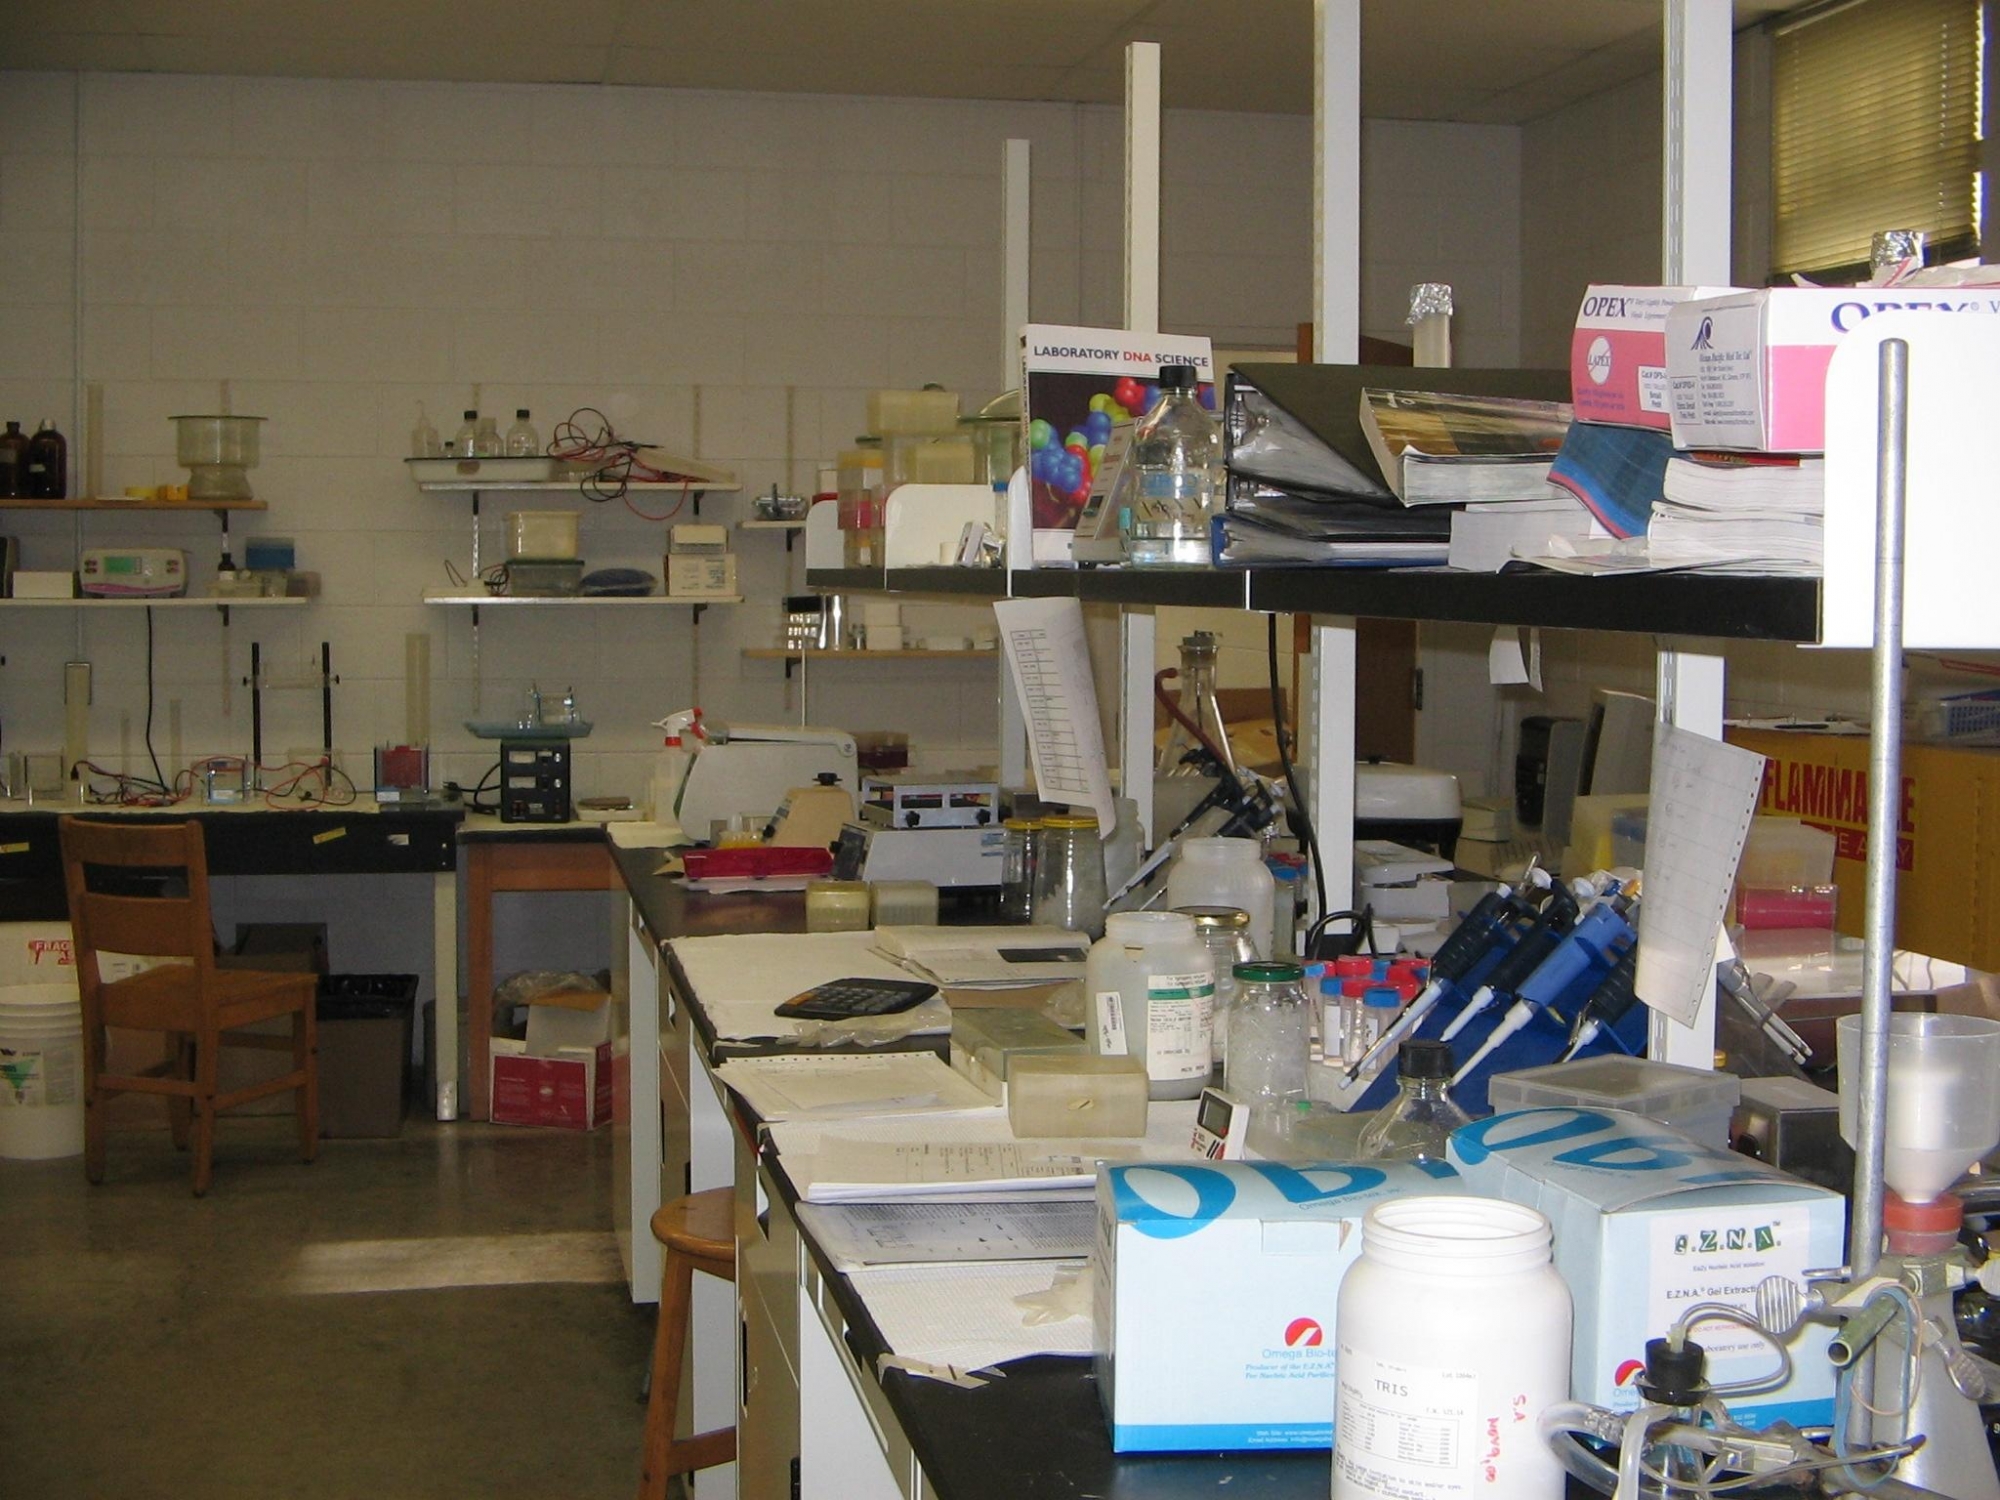 Fourth image of lab